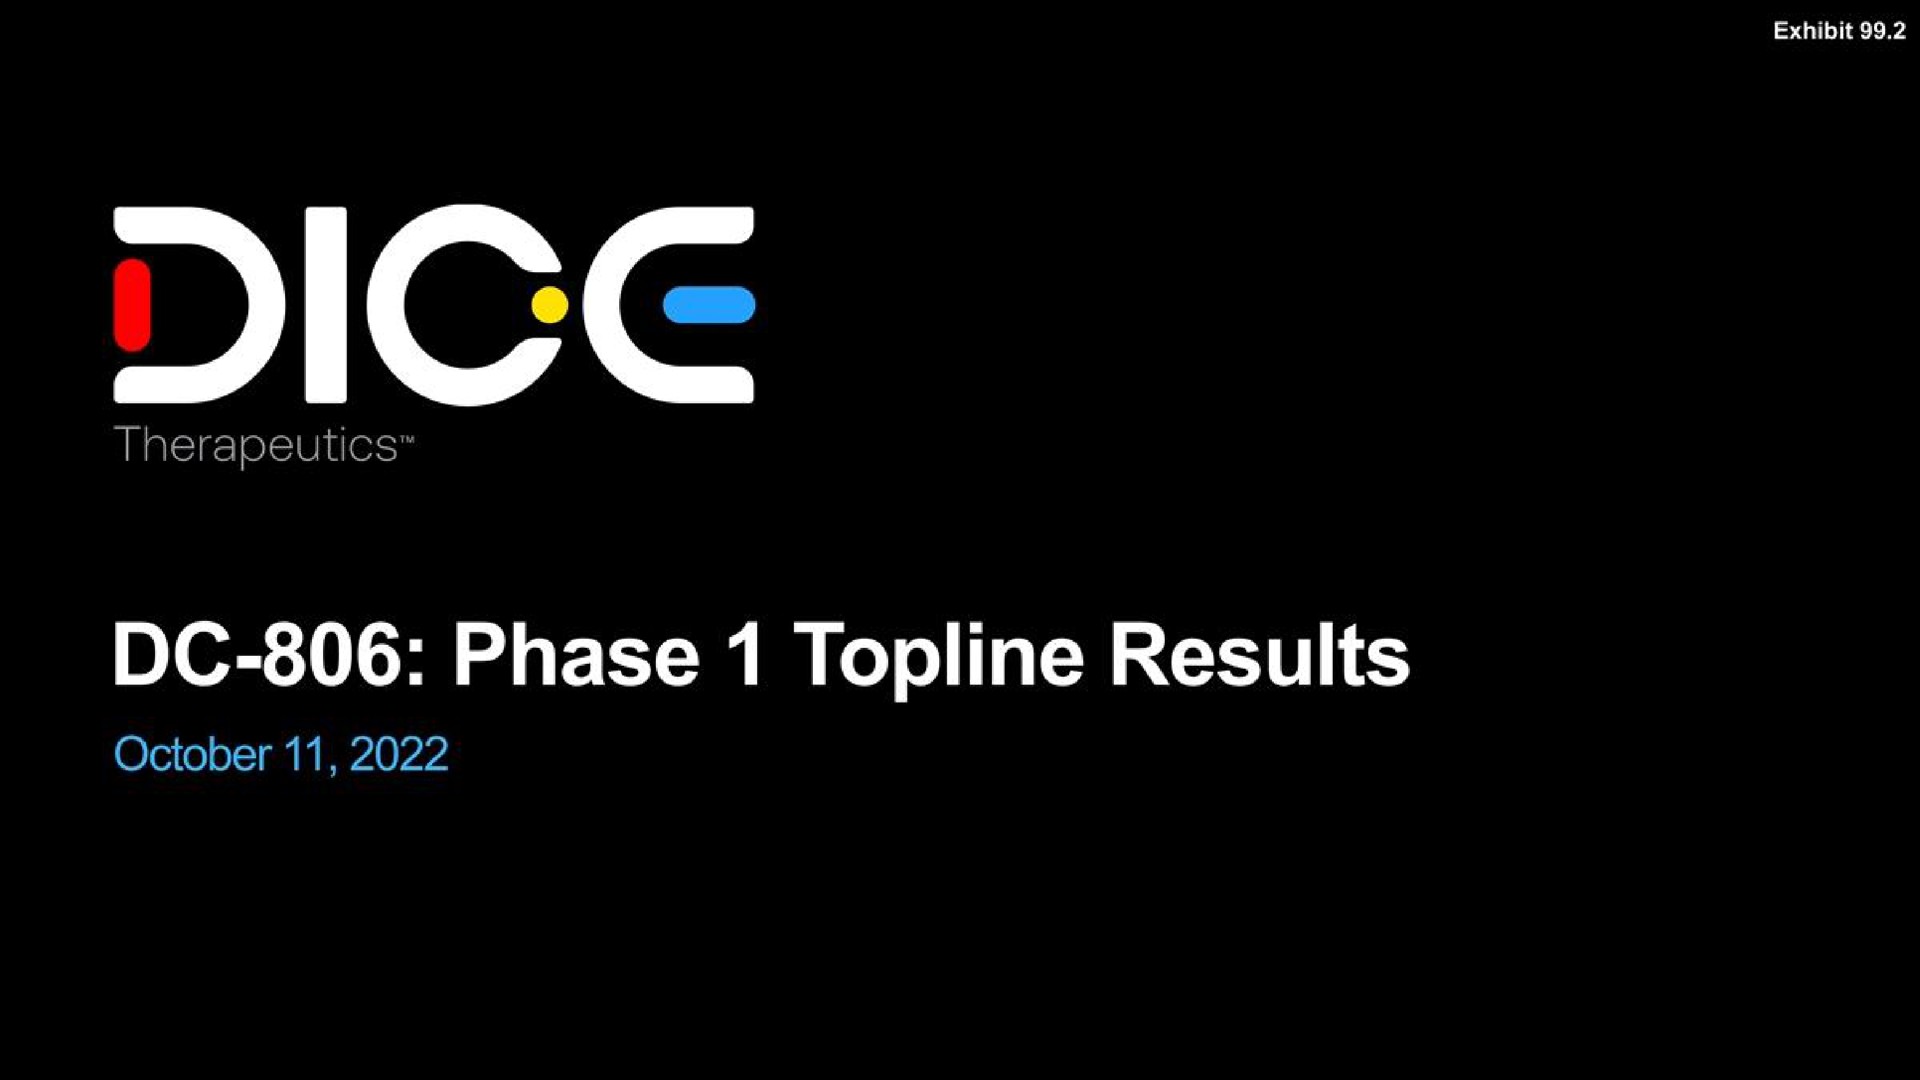 phase topline results | DICE Therapeutics